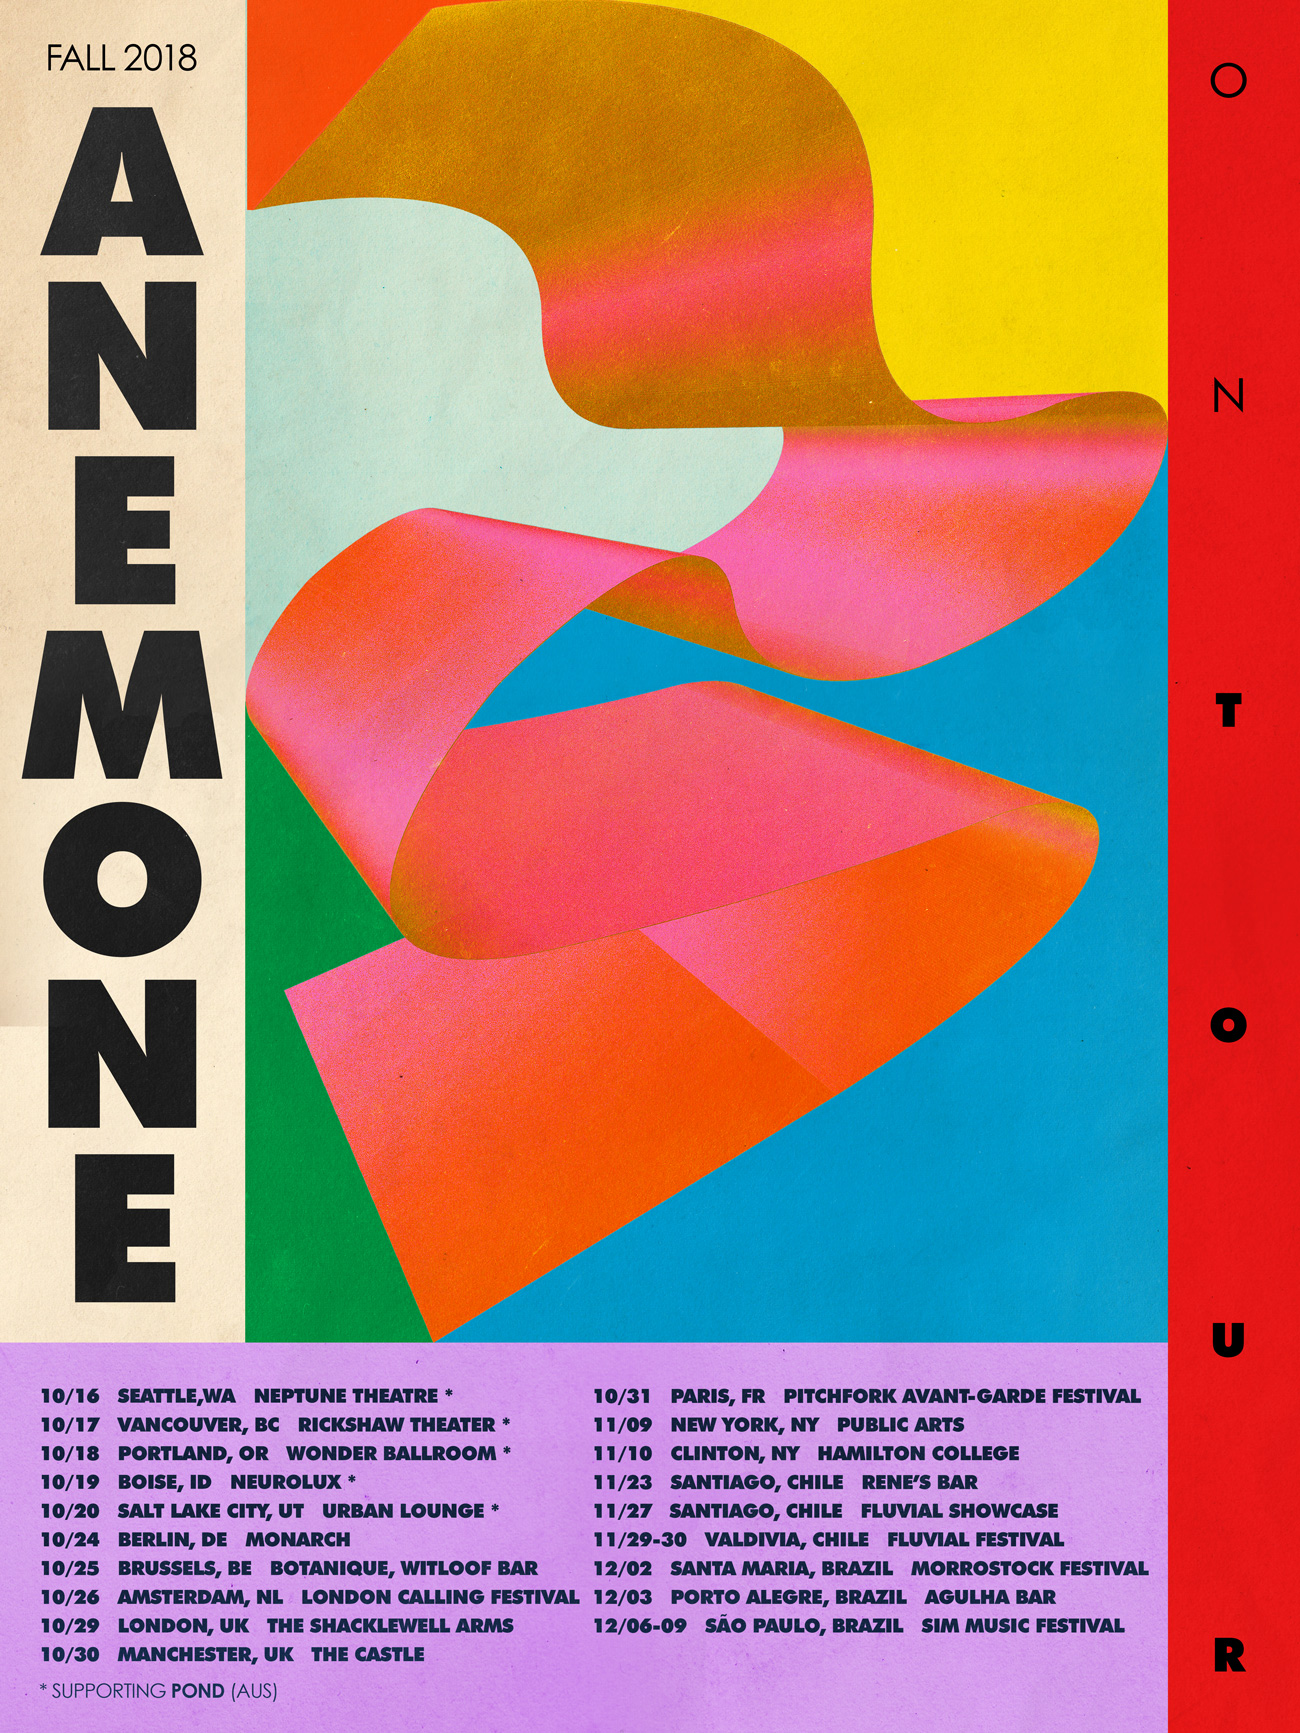 Anemone,-Fall-2018-Poster-Aaron-Denton